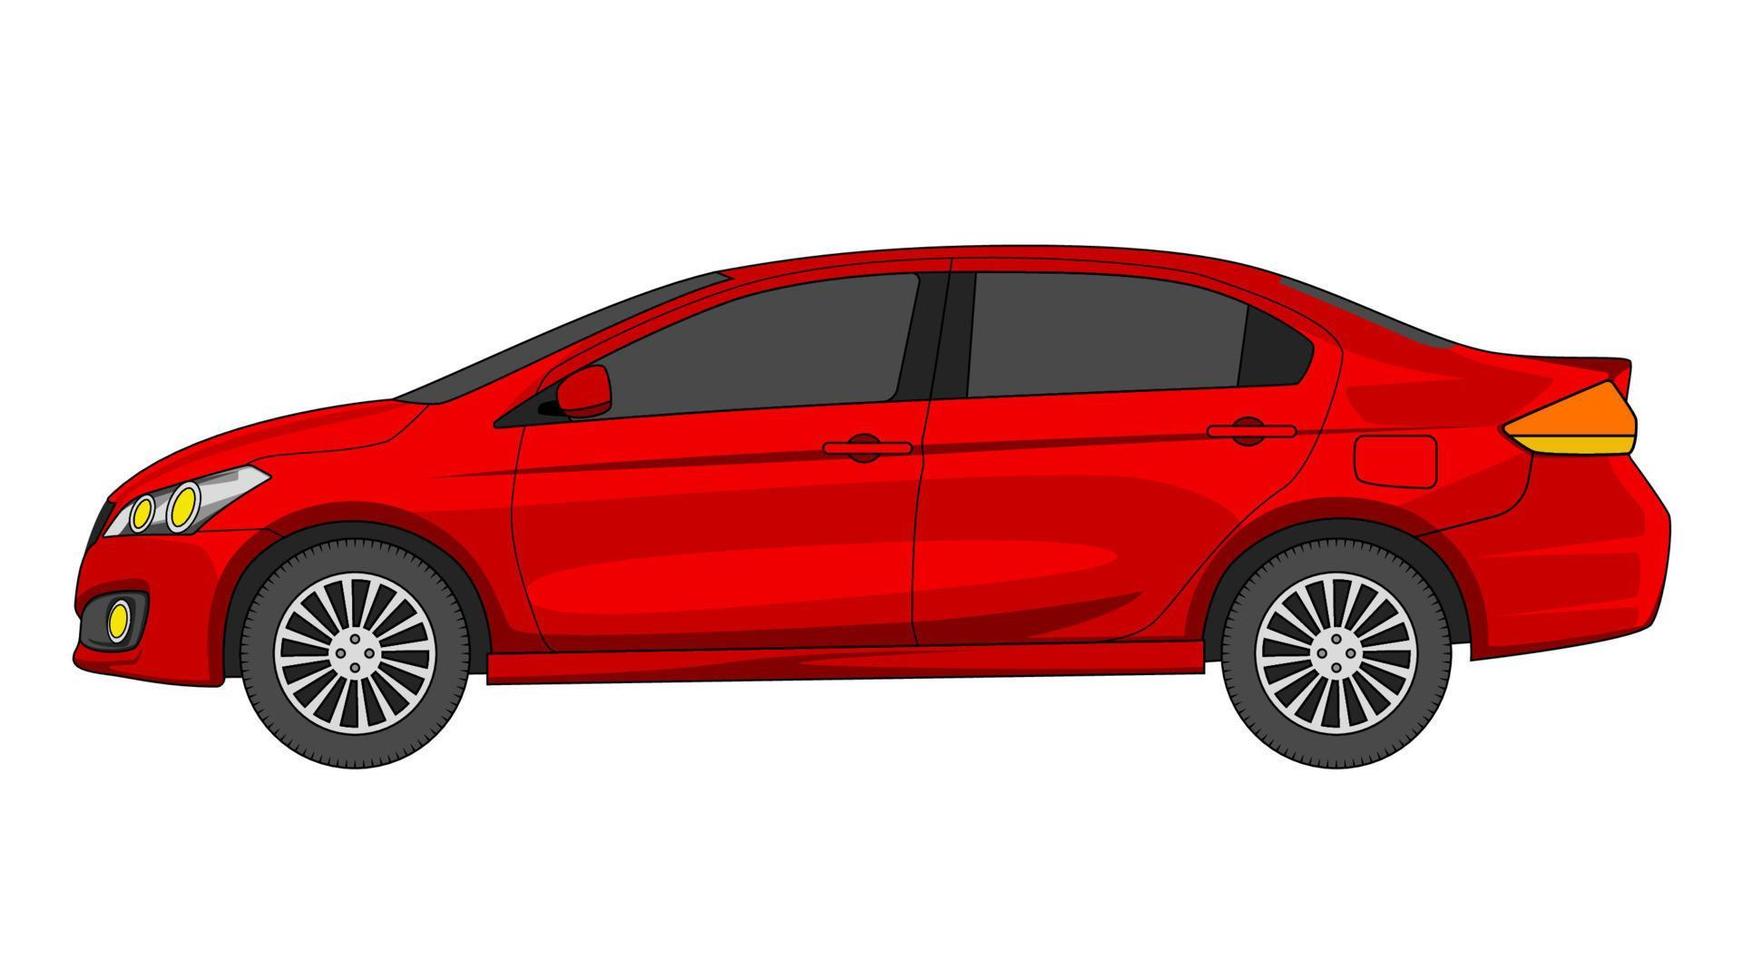 vetor de carro sedan premium, ilustração vetorial de carro sedan em estilo simples.